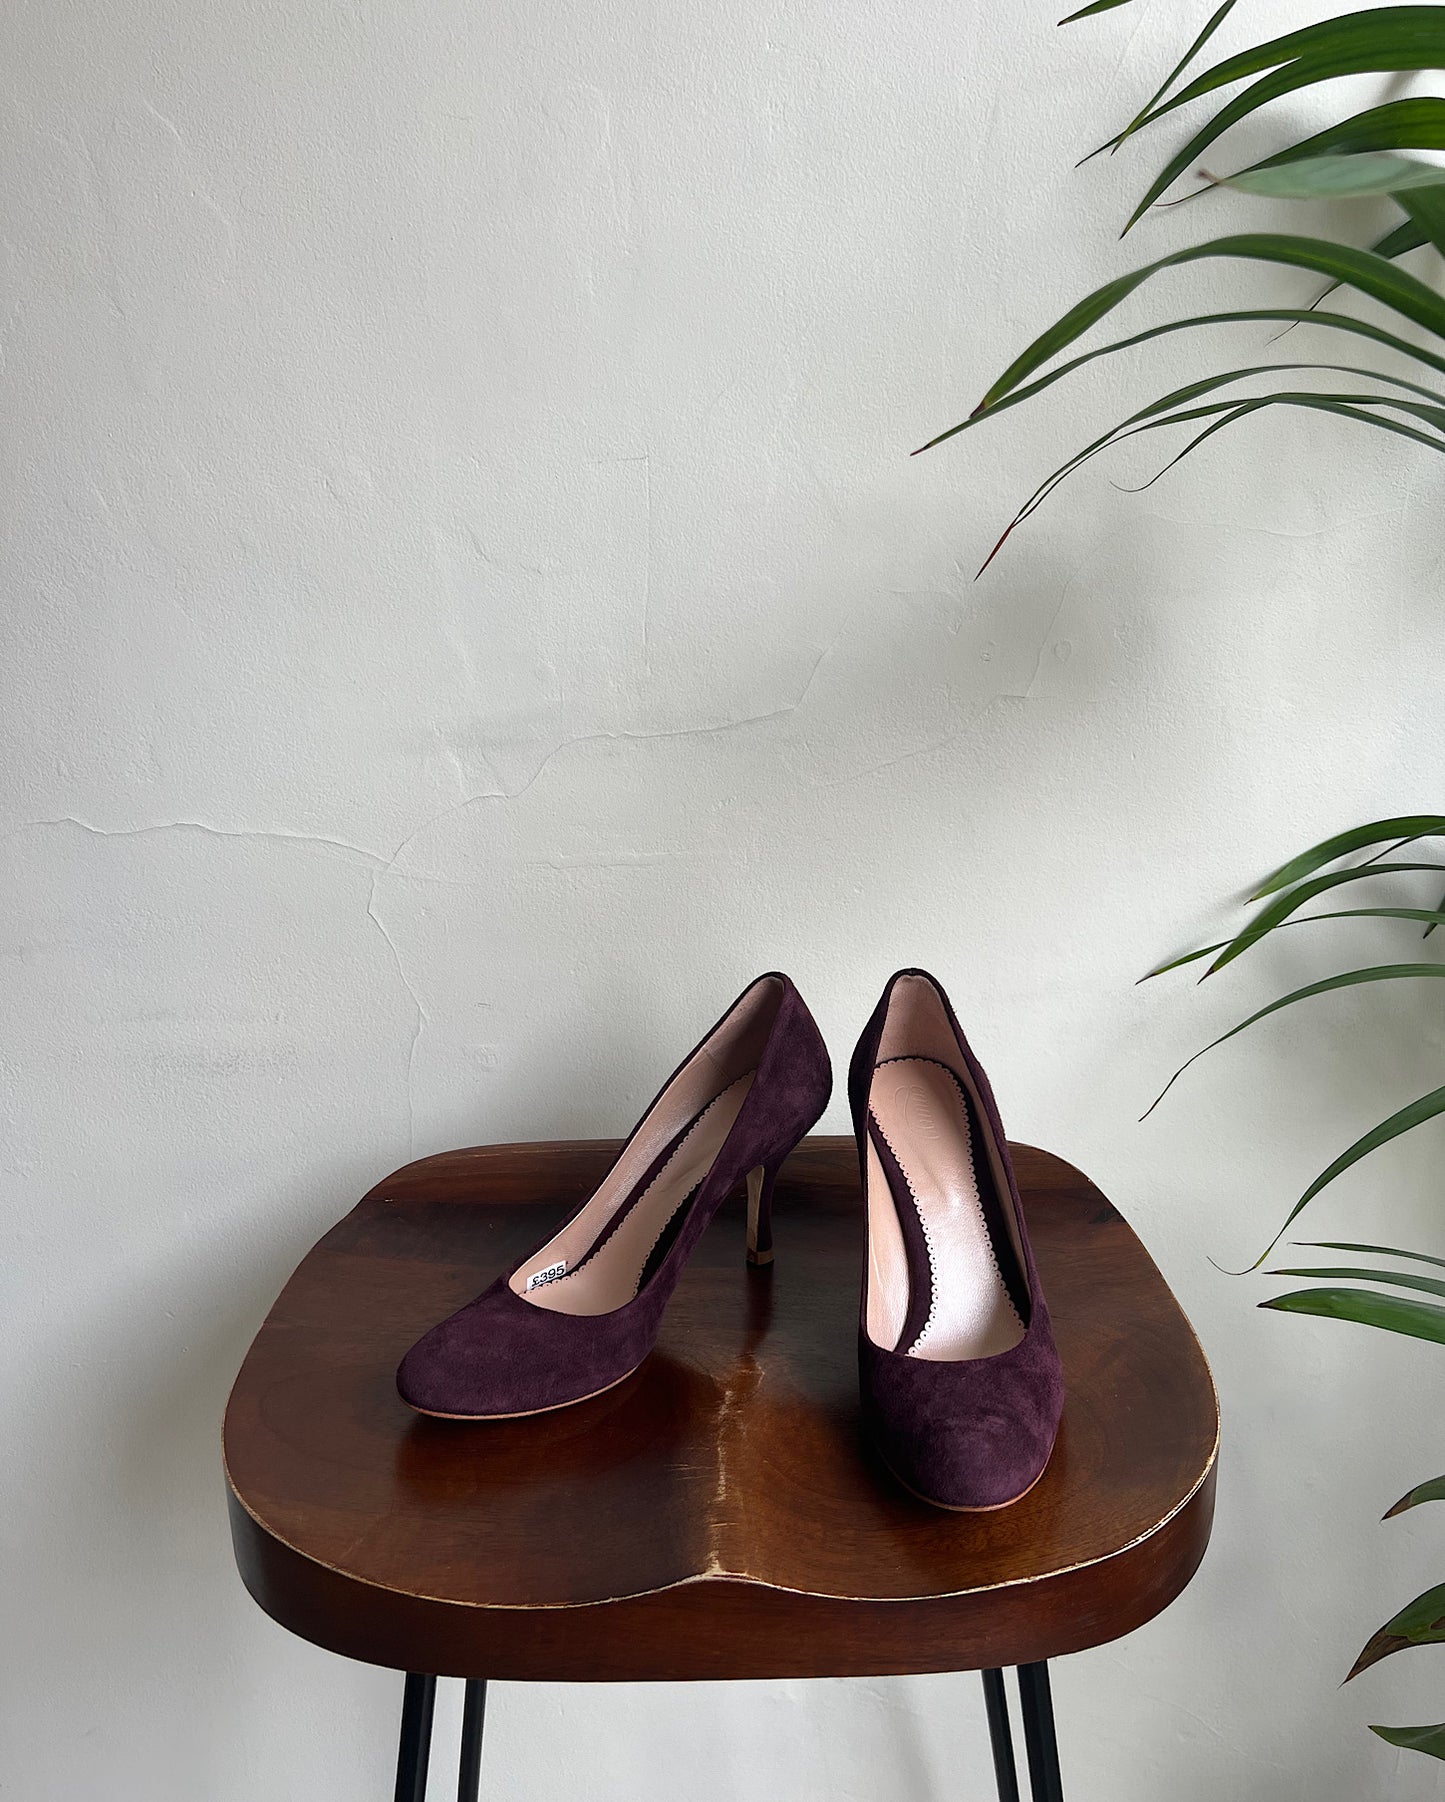 SALE - Purple / Aubergine Suede Heels - Size 5